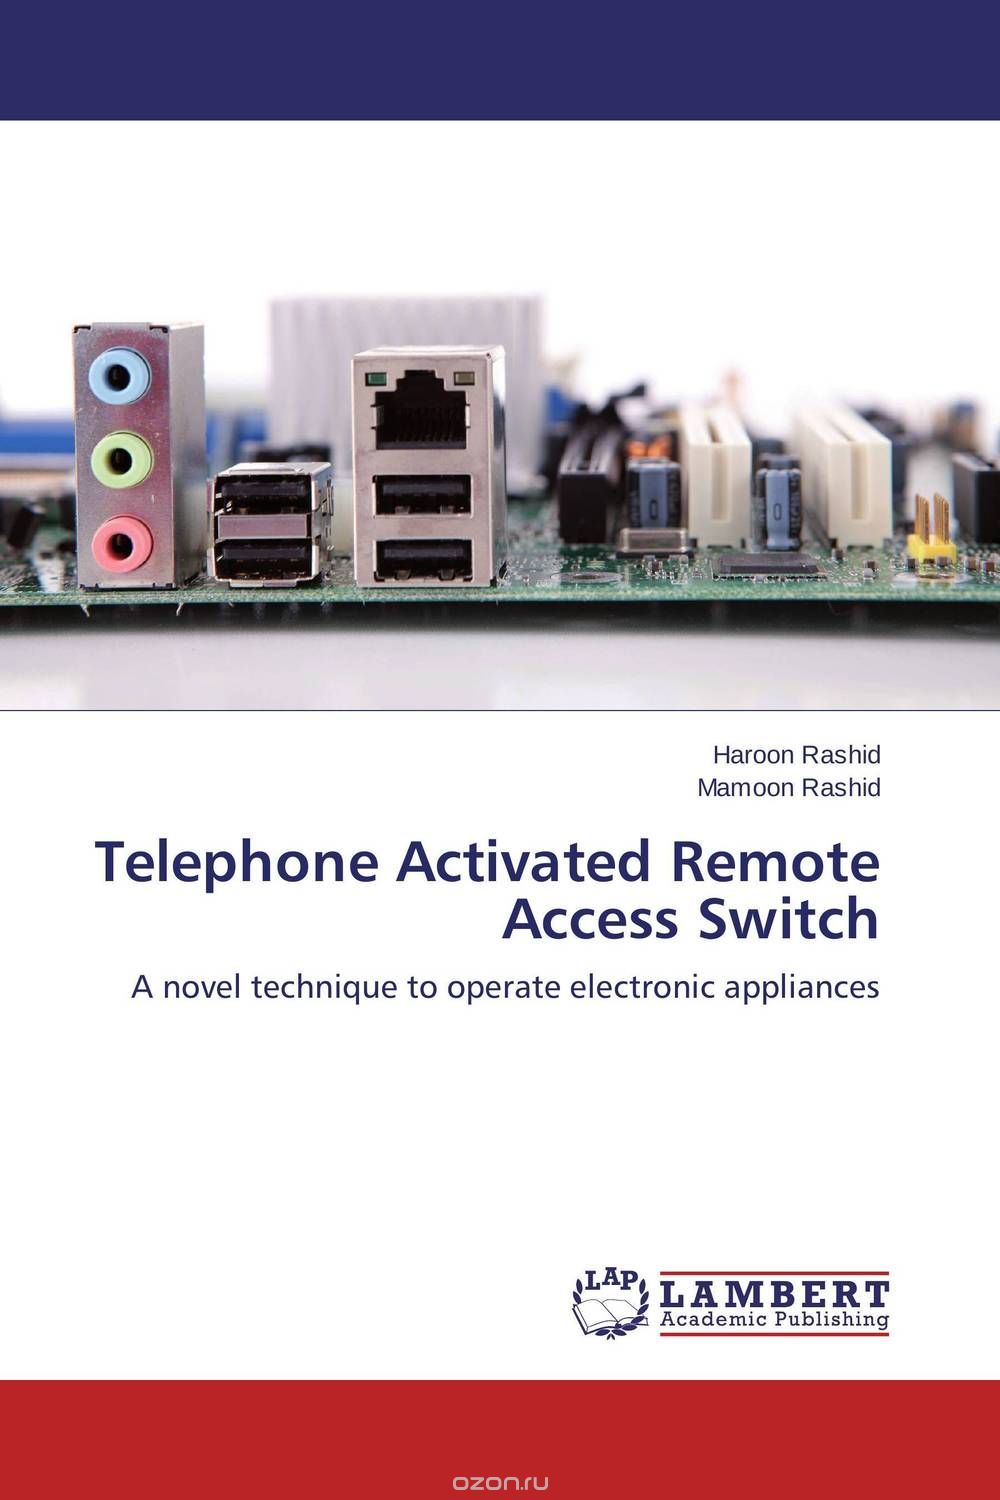 Скачать книгу "Telephone Activated Remote Access Switch"